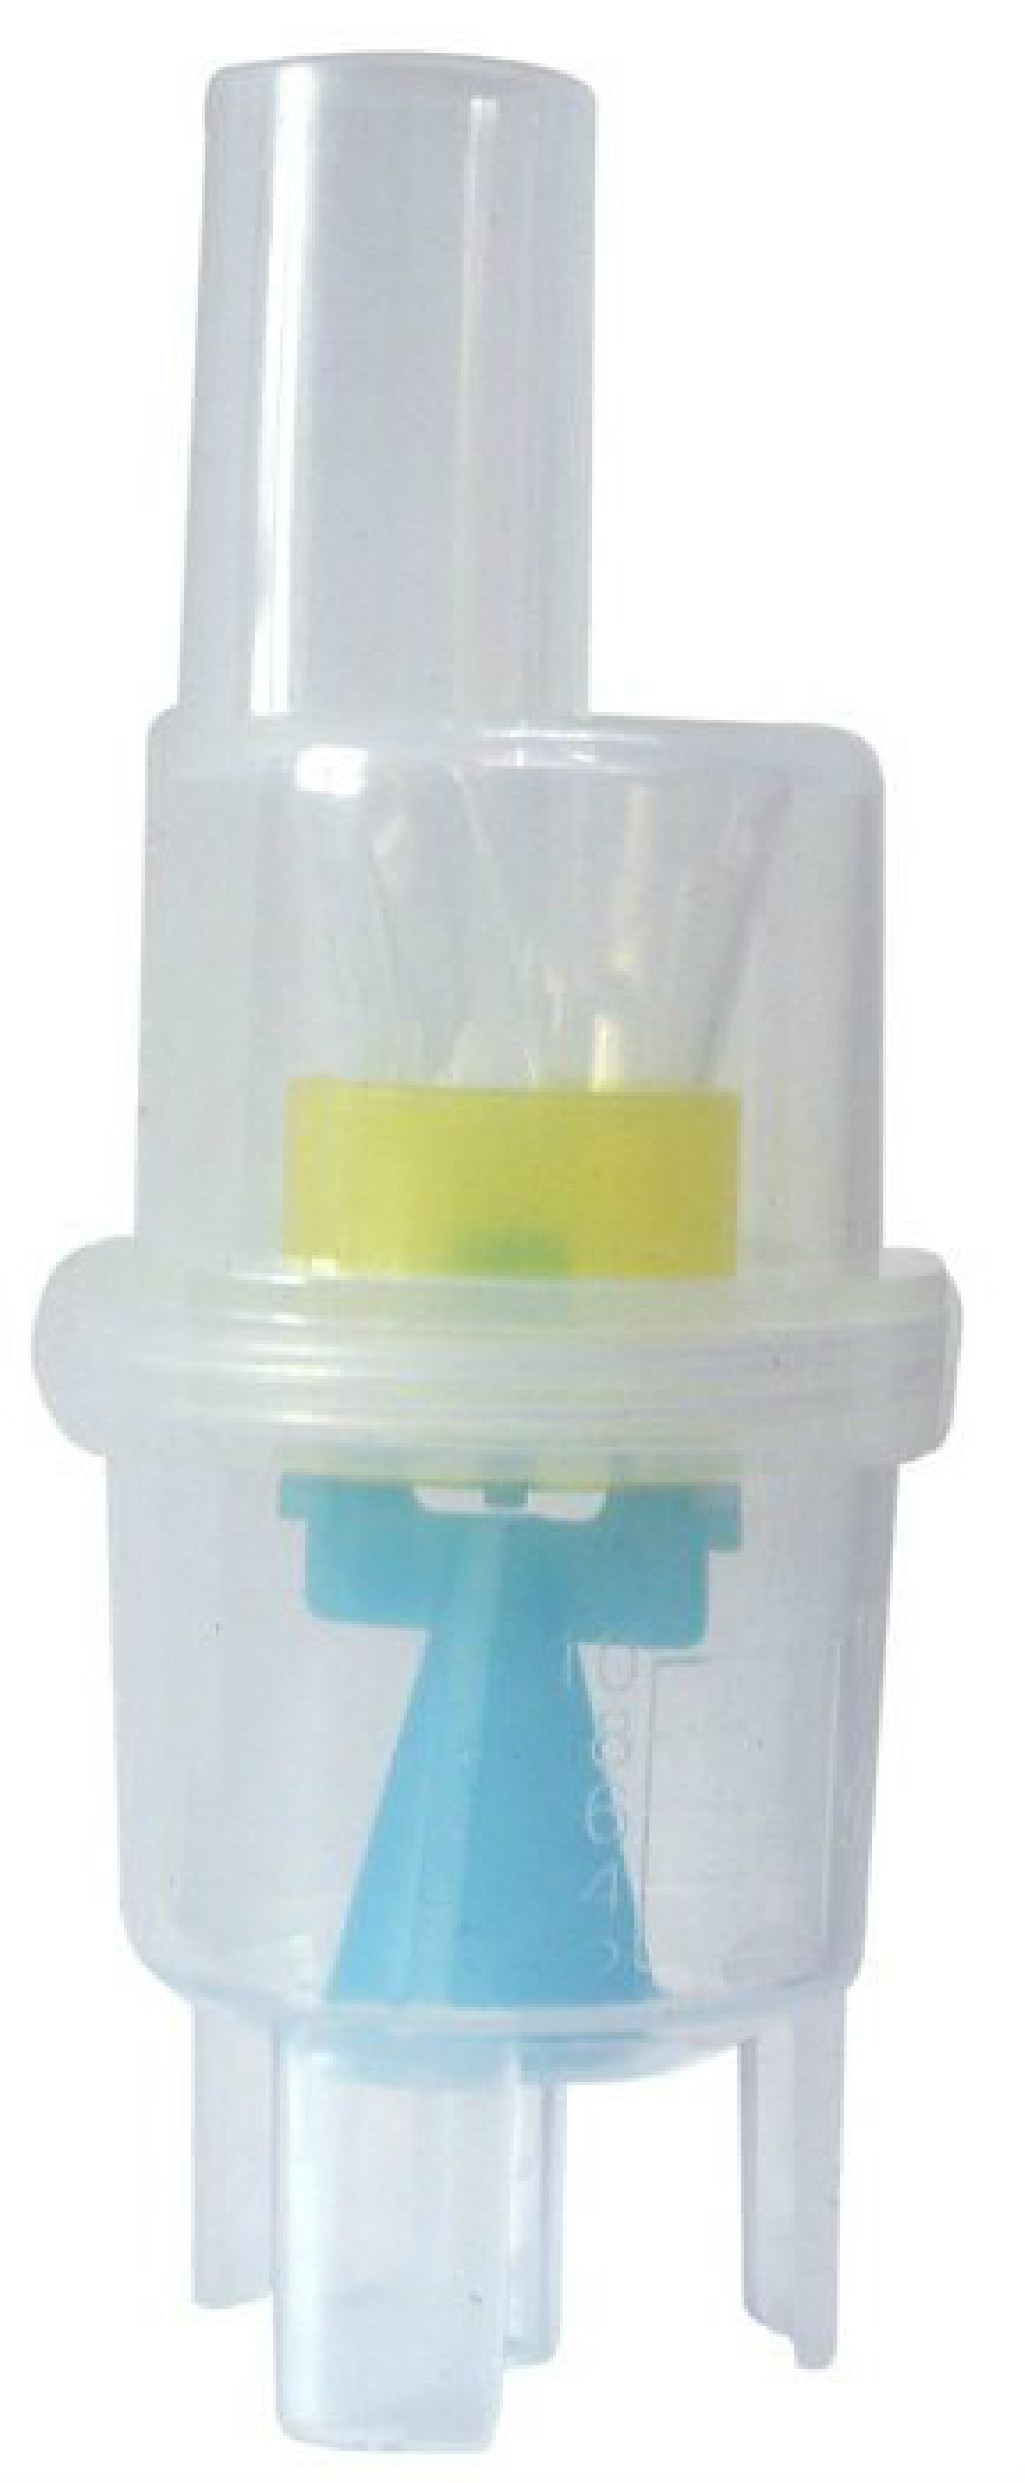 Intec Pro nebulizator do inhalatorów Intec